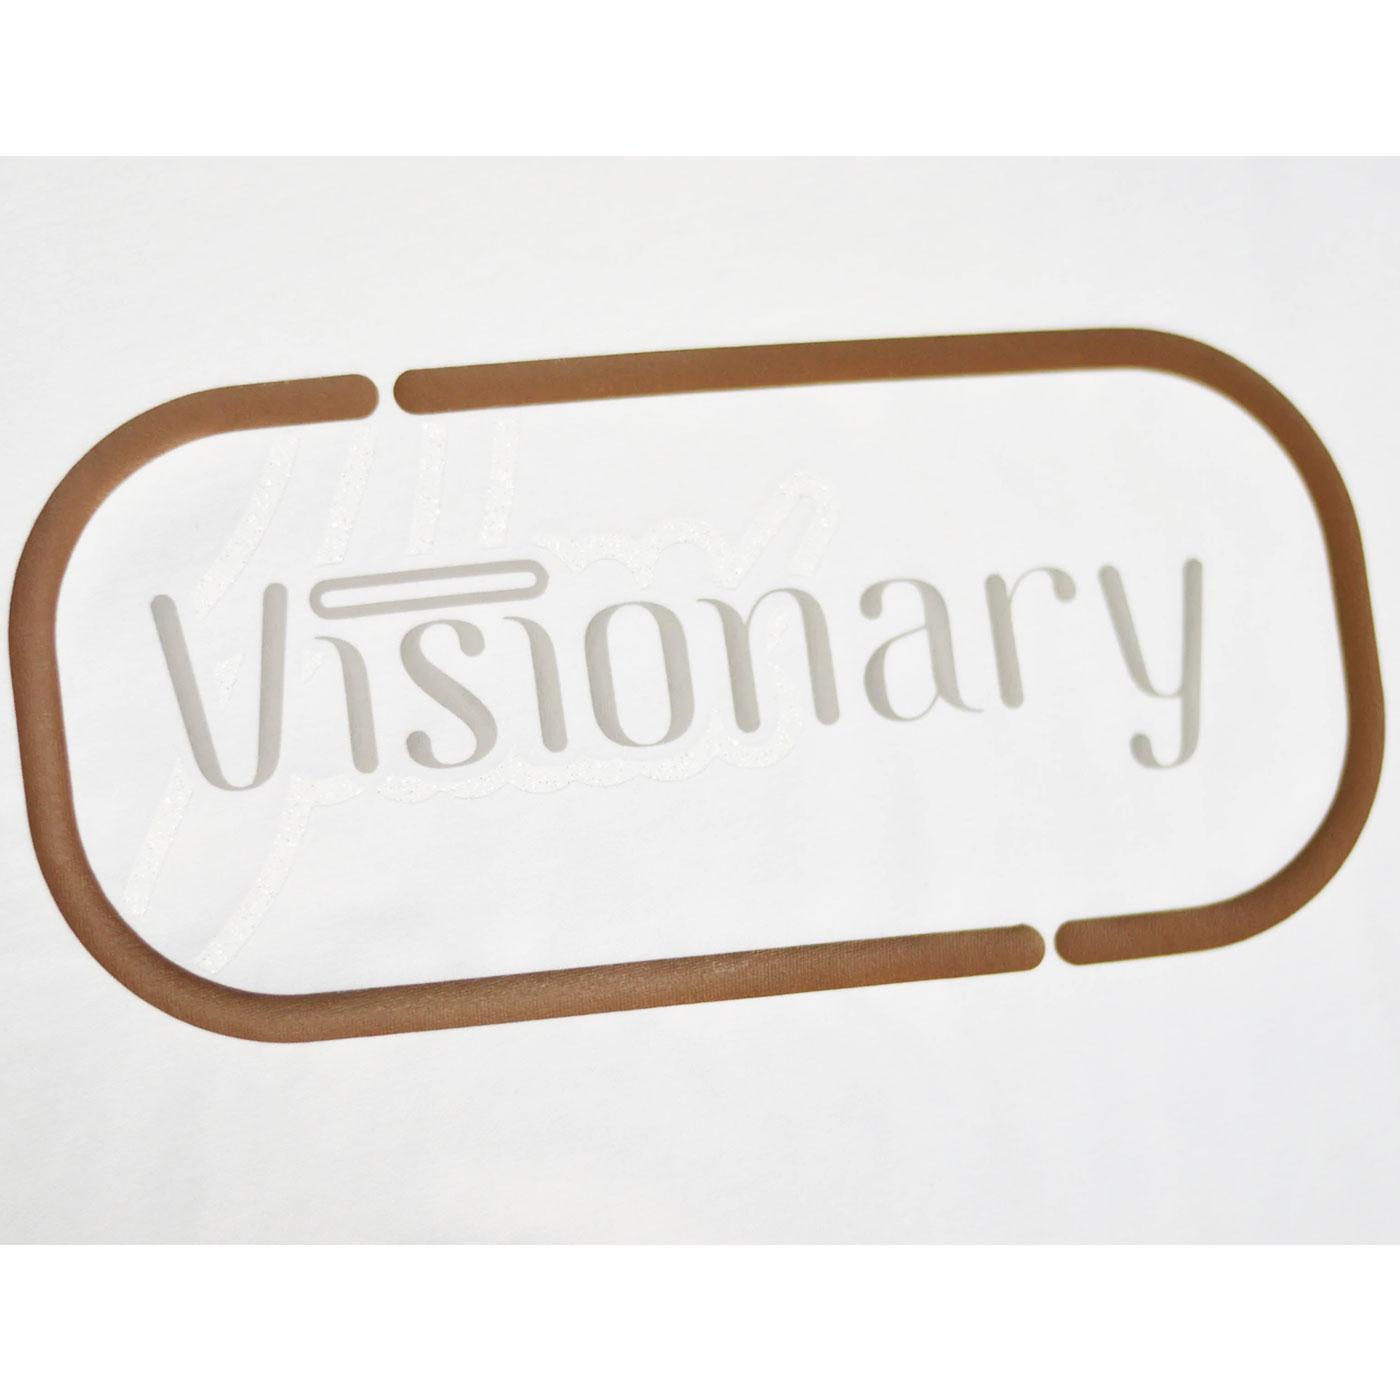 Visionary Box Premium Tee (White/Brown) Detail | FSHNS Brand